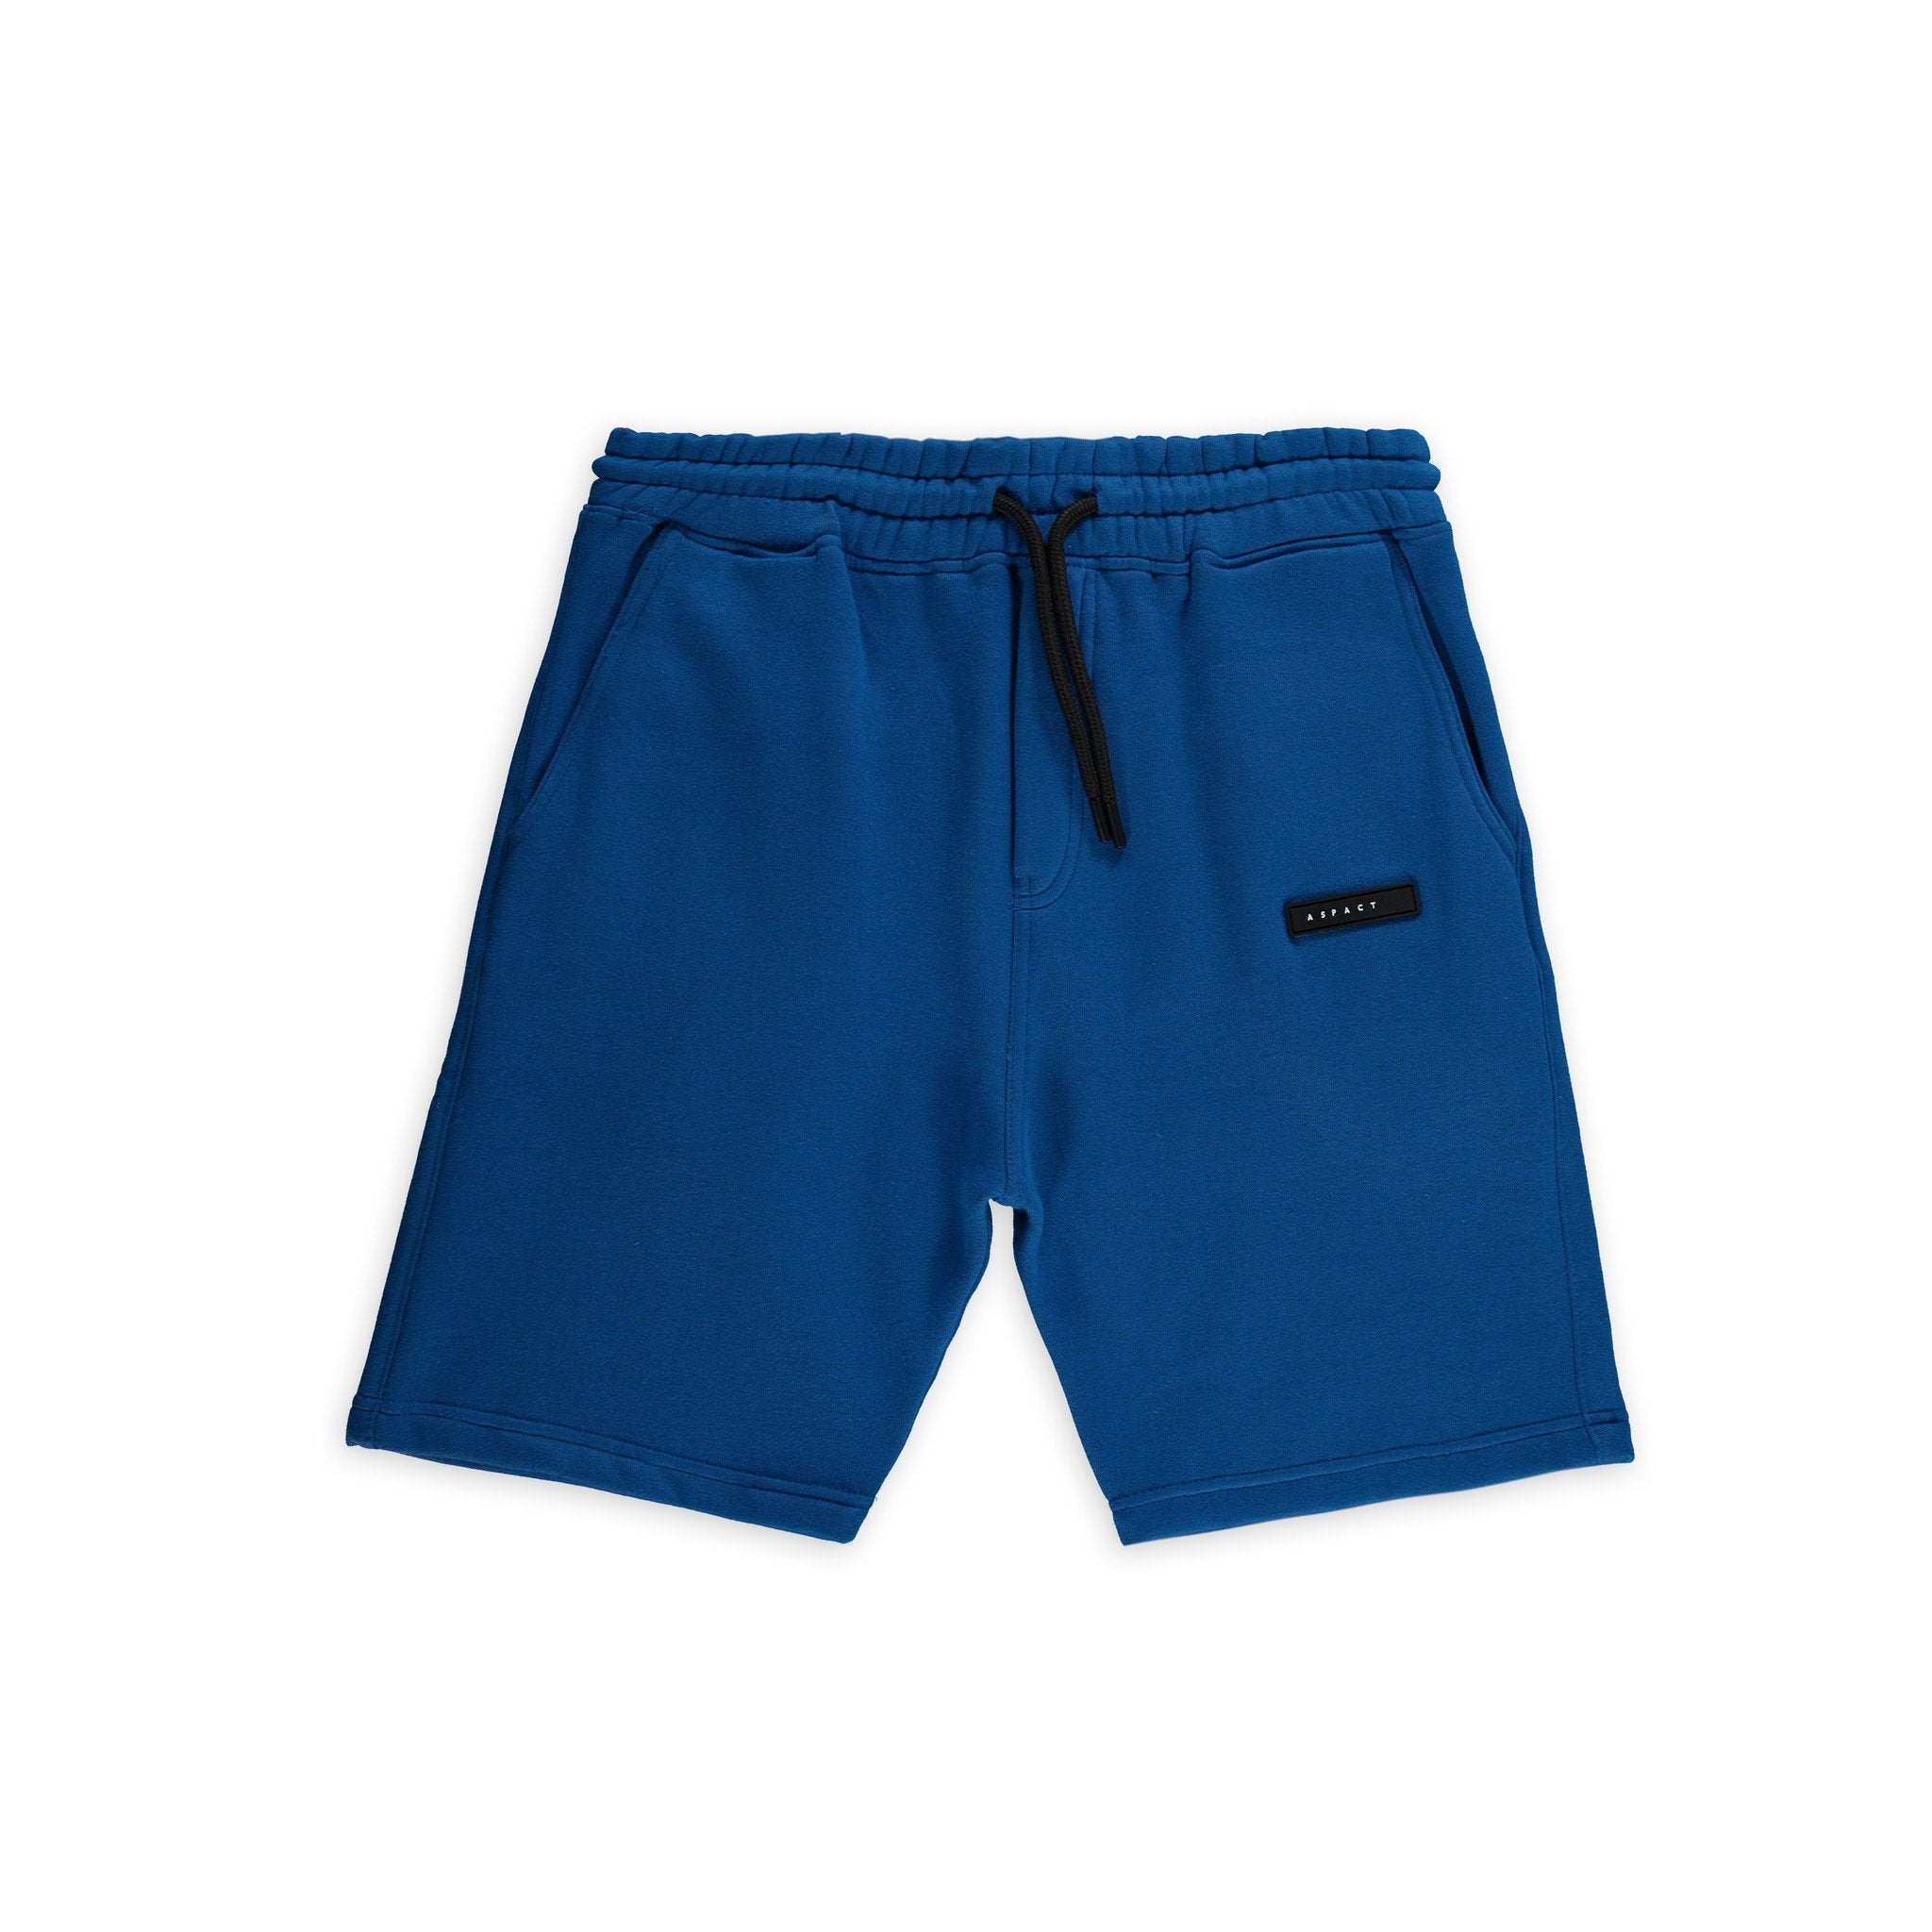 Aspact Premium Sweat Short Blauw